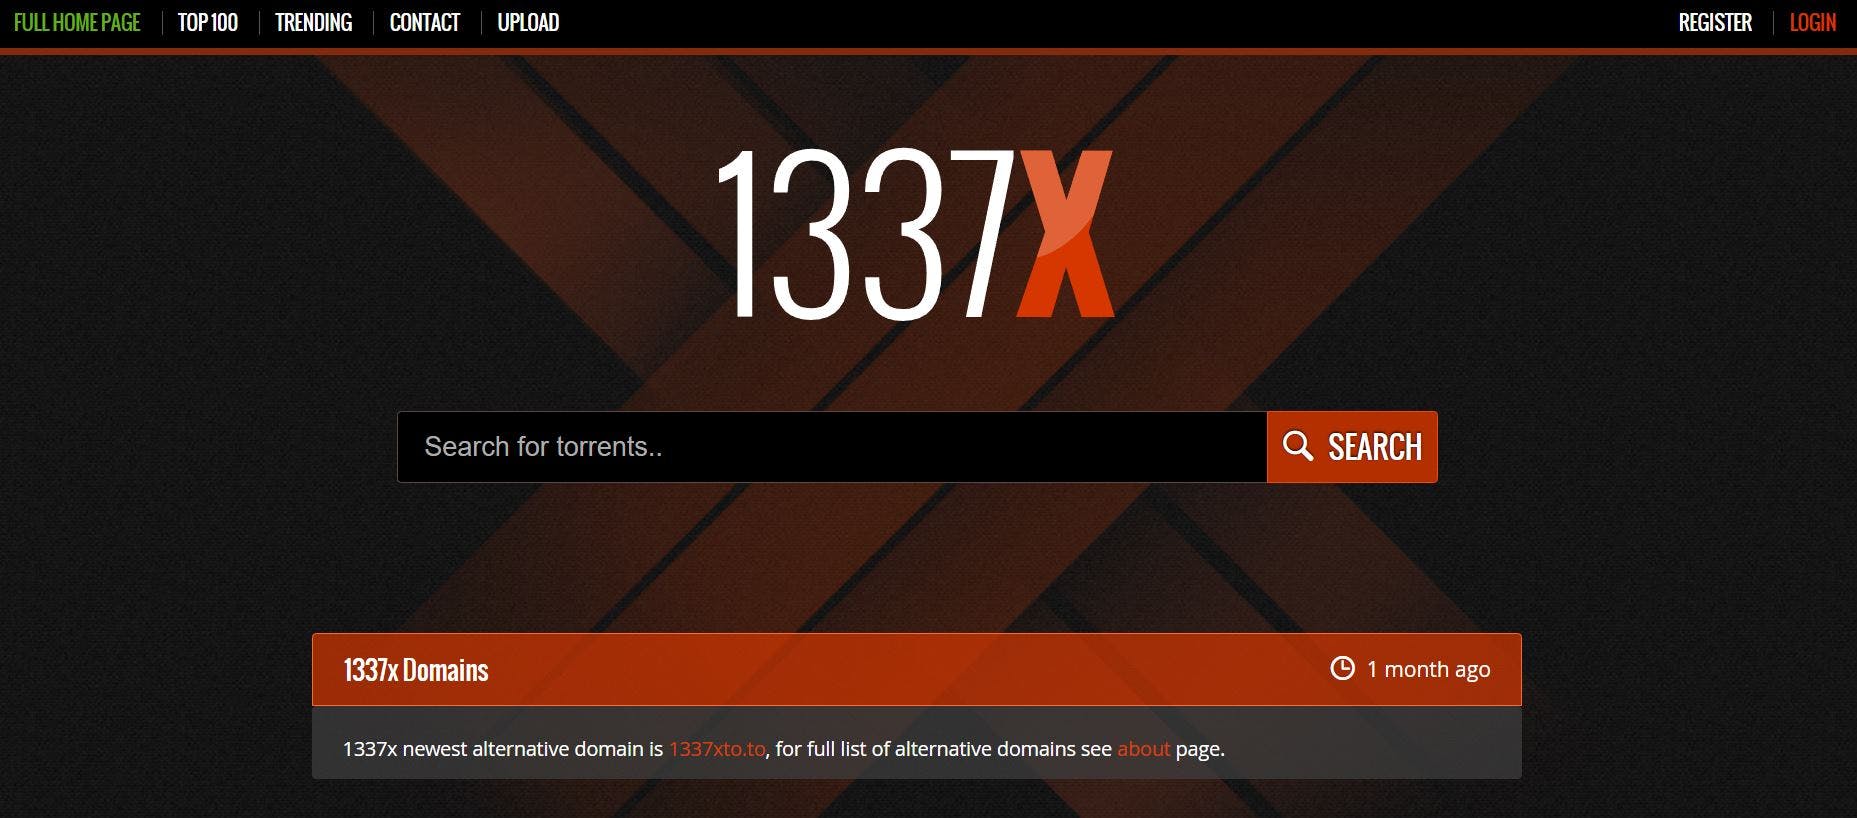 1337x - Torrent page improvements